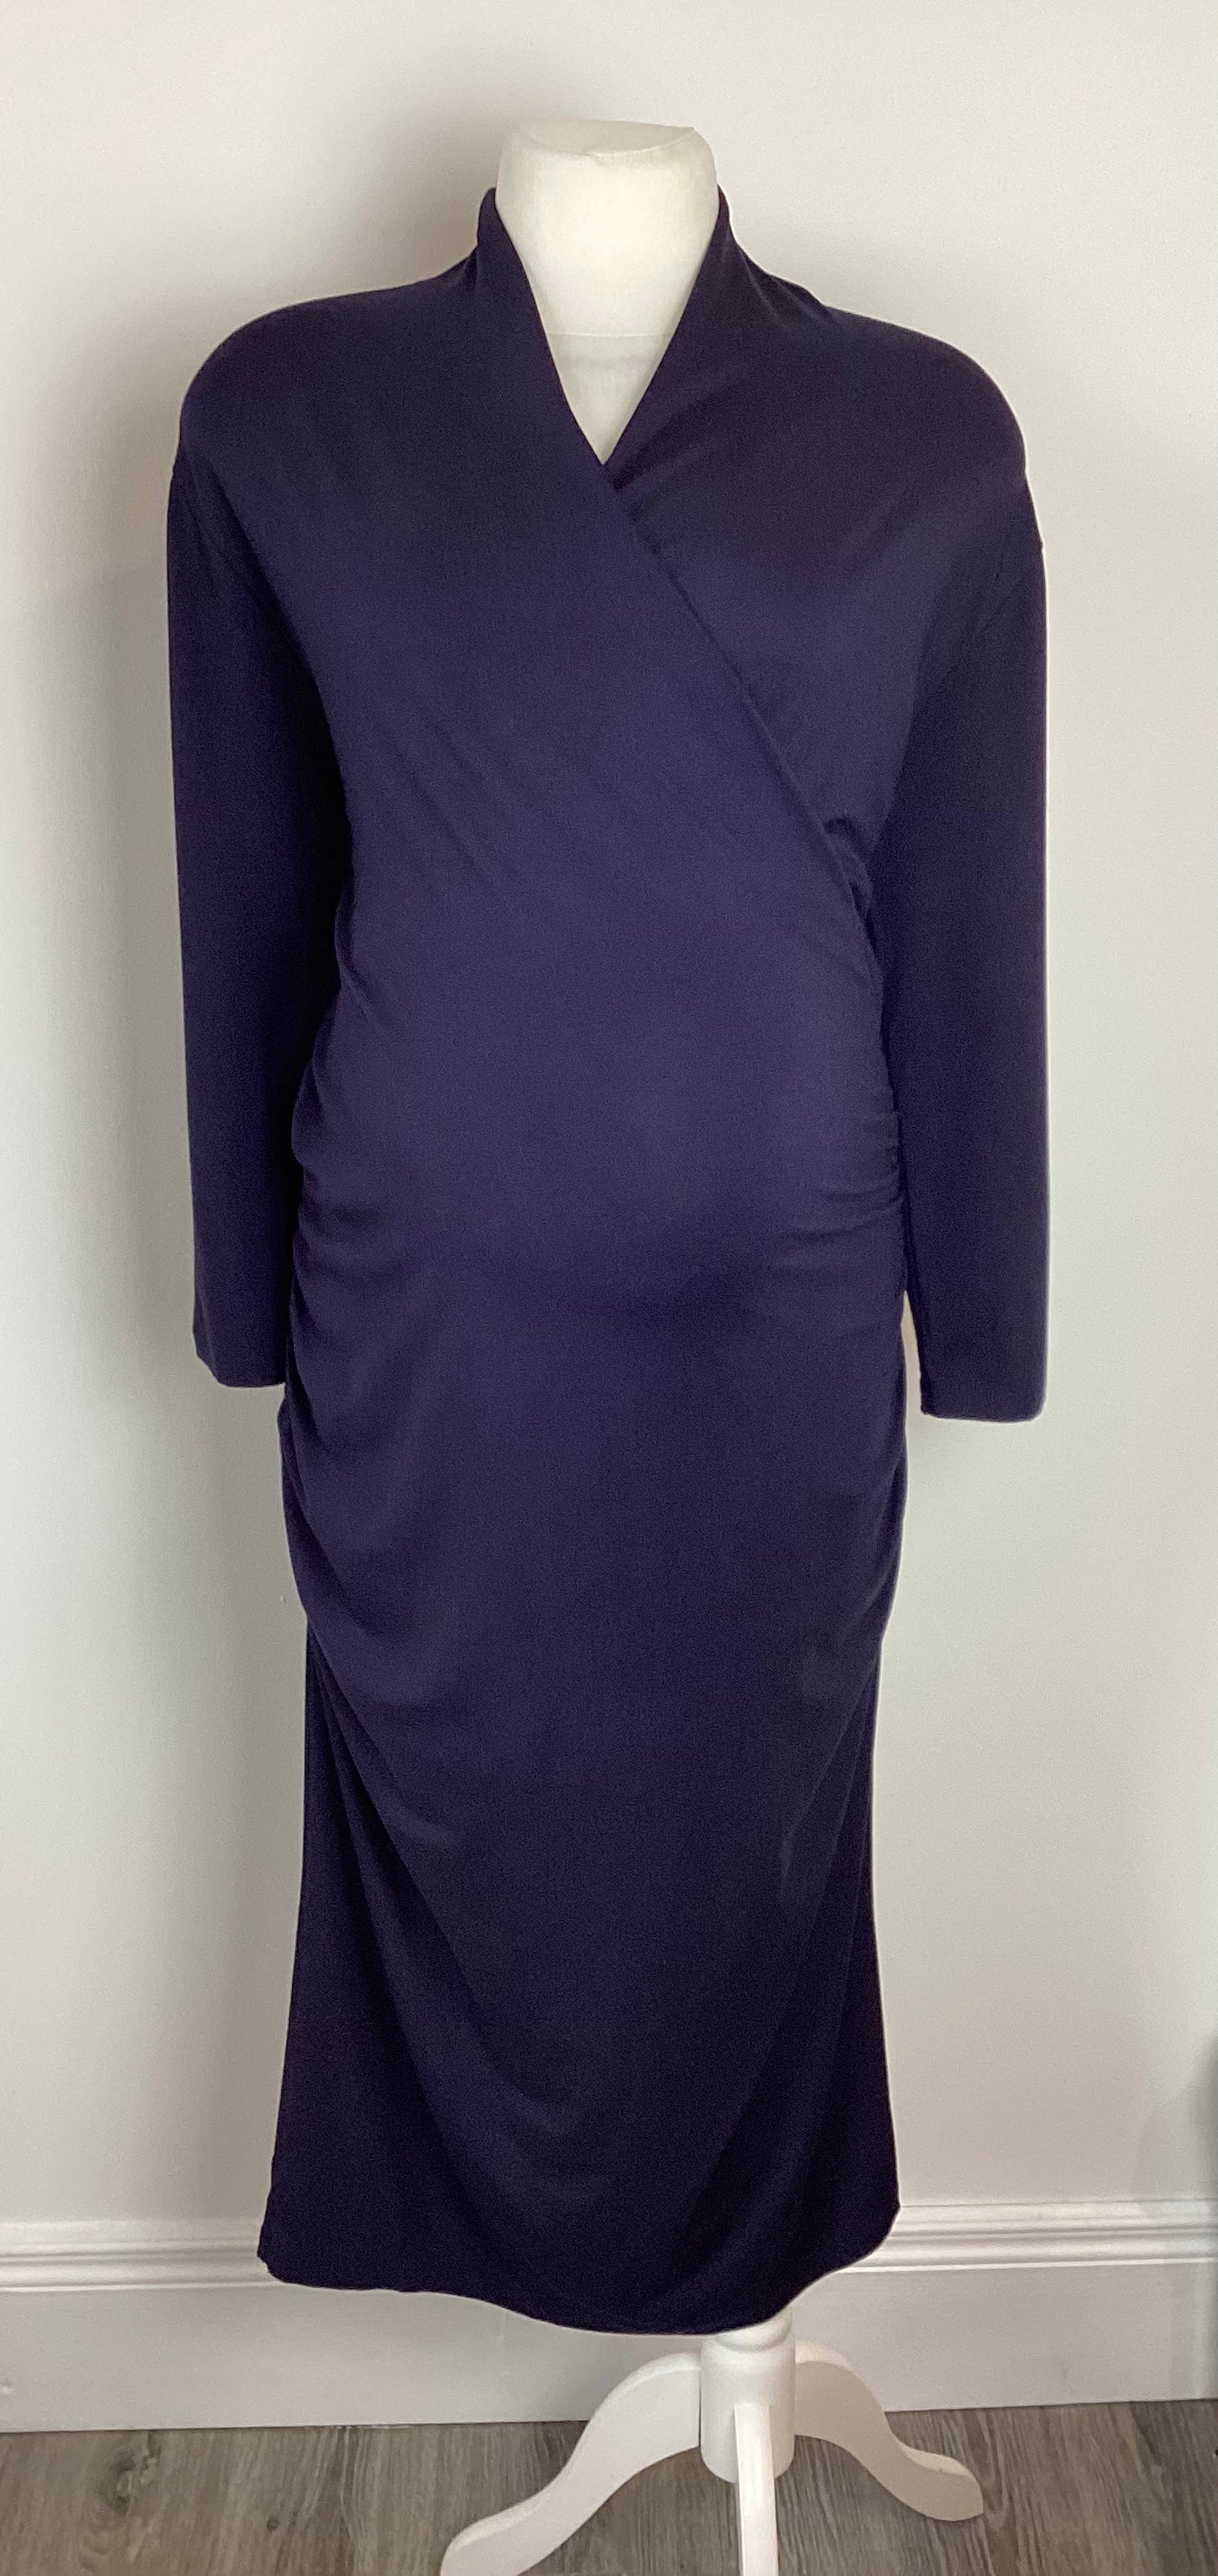 Isabella Oliver navy long dress 3/4 length sleeve - Size 4 (Approx UK 14/16)